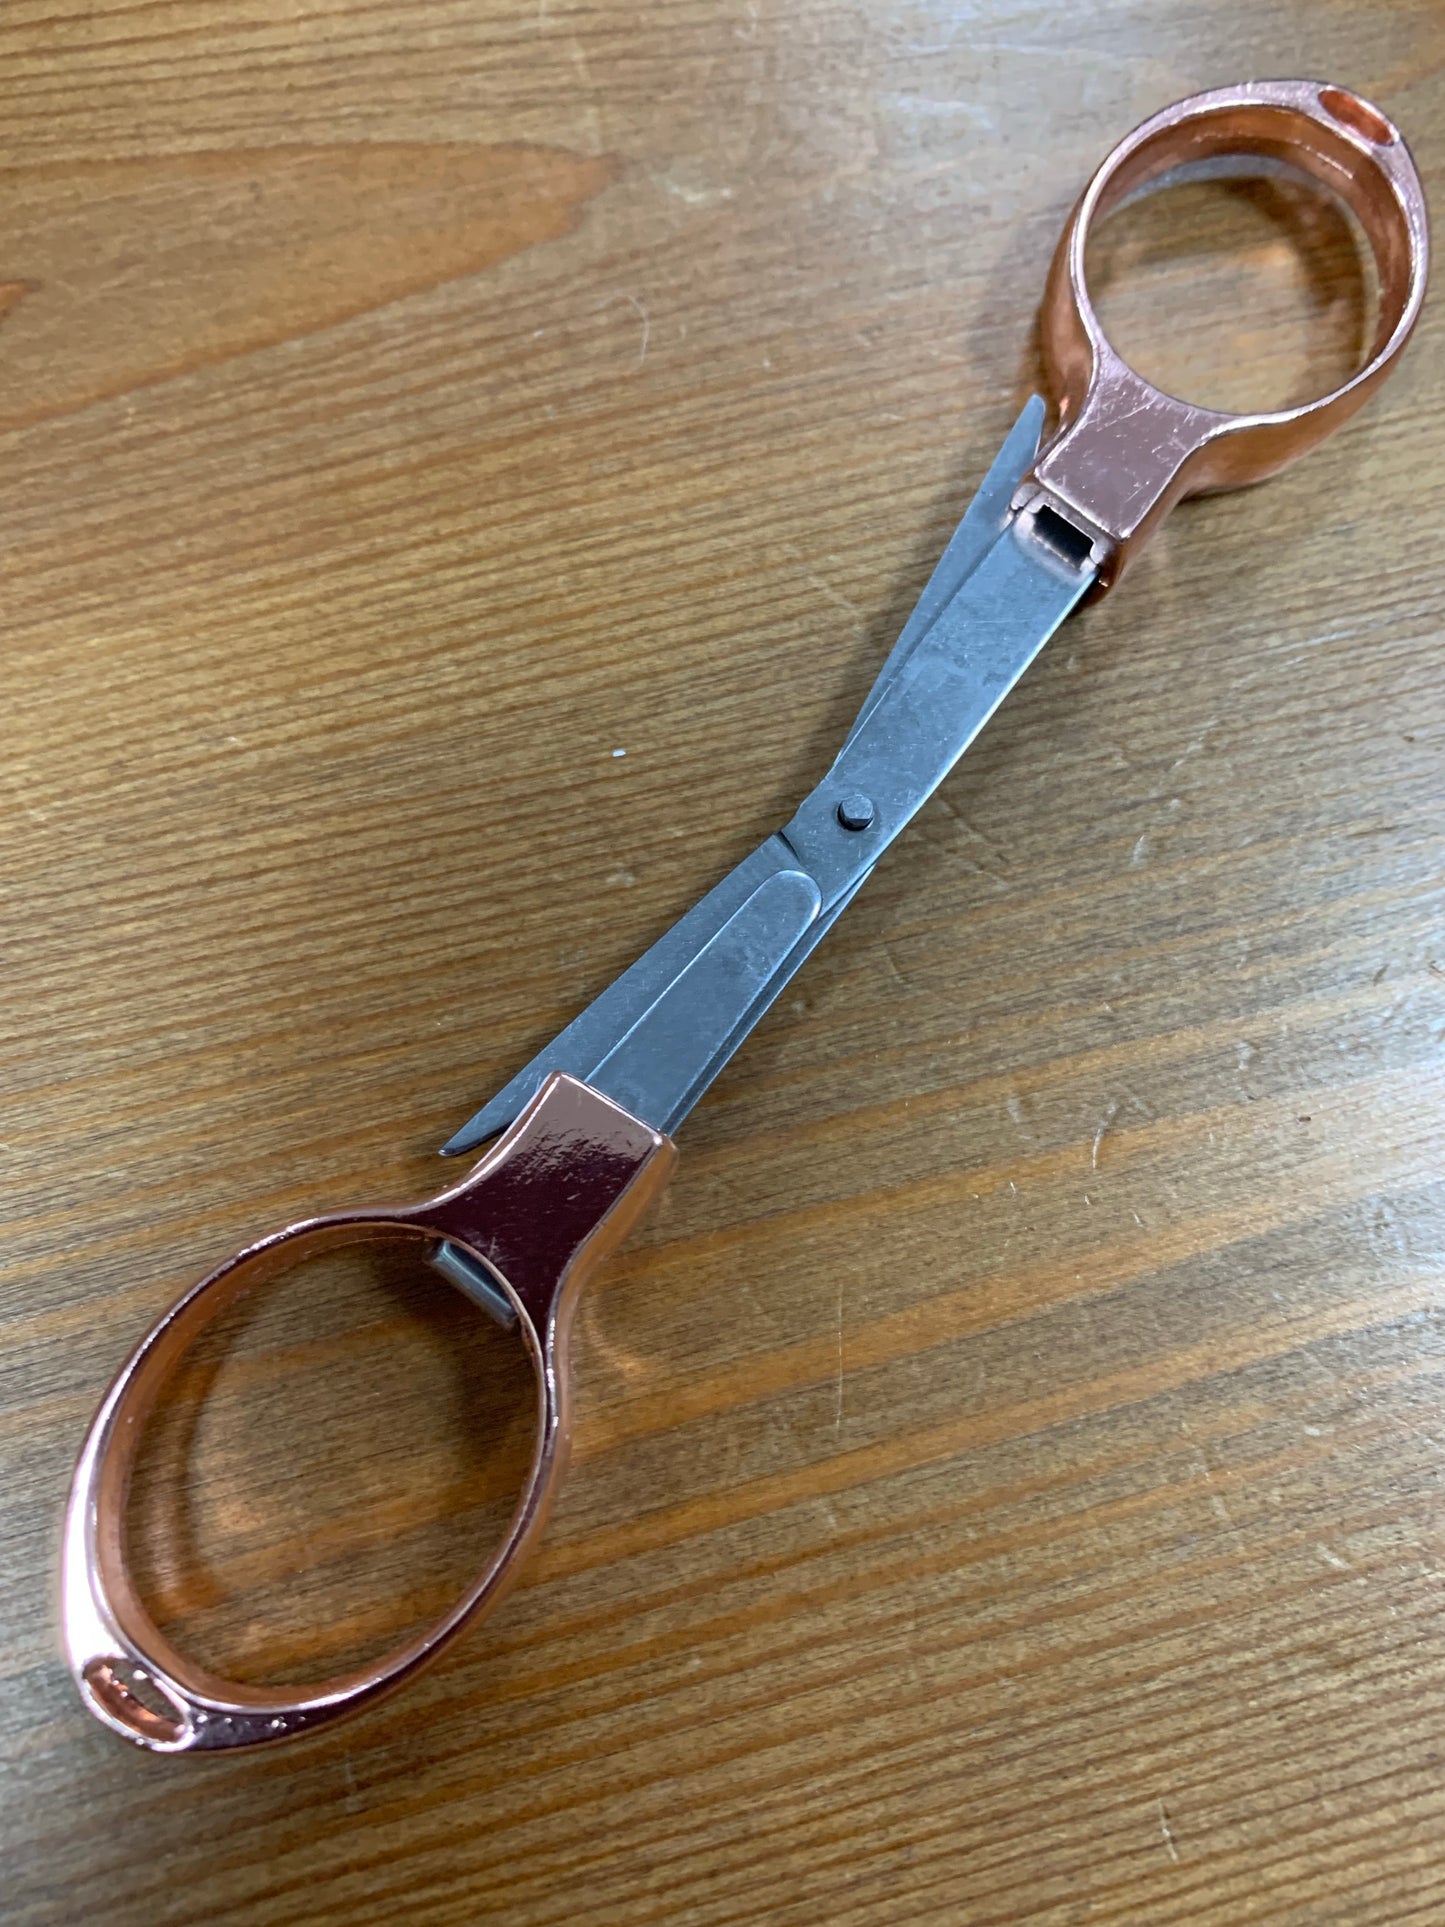 Knitpro Compact scissors